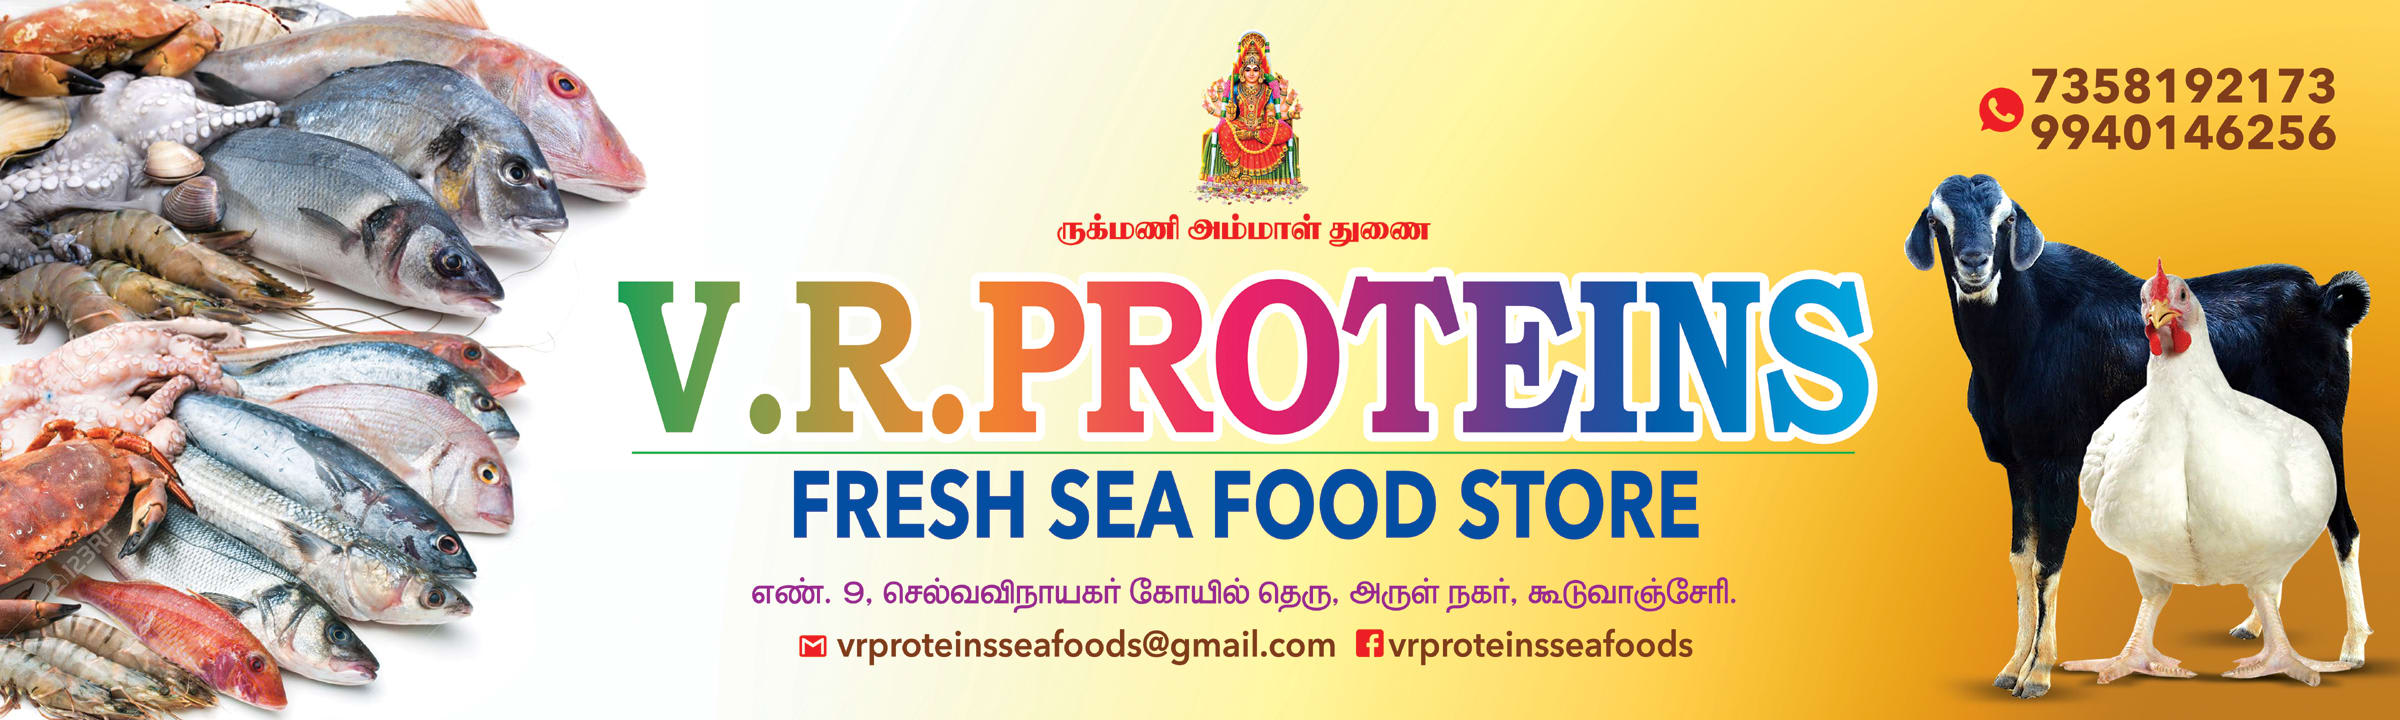 Vrproteins Fresh Sea Food Store